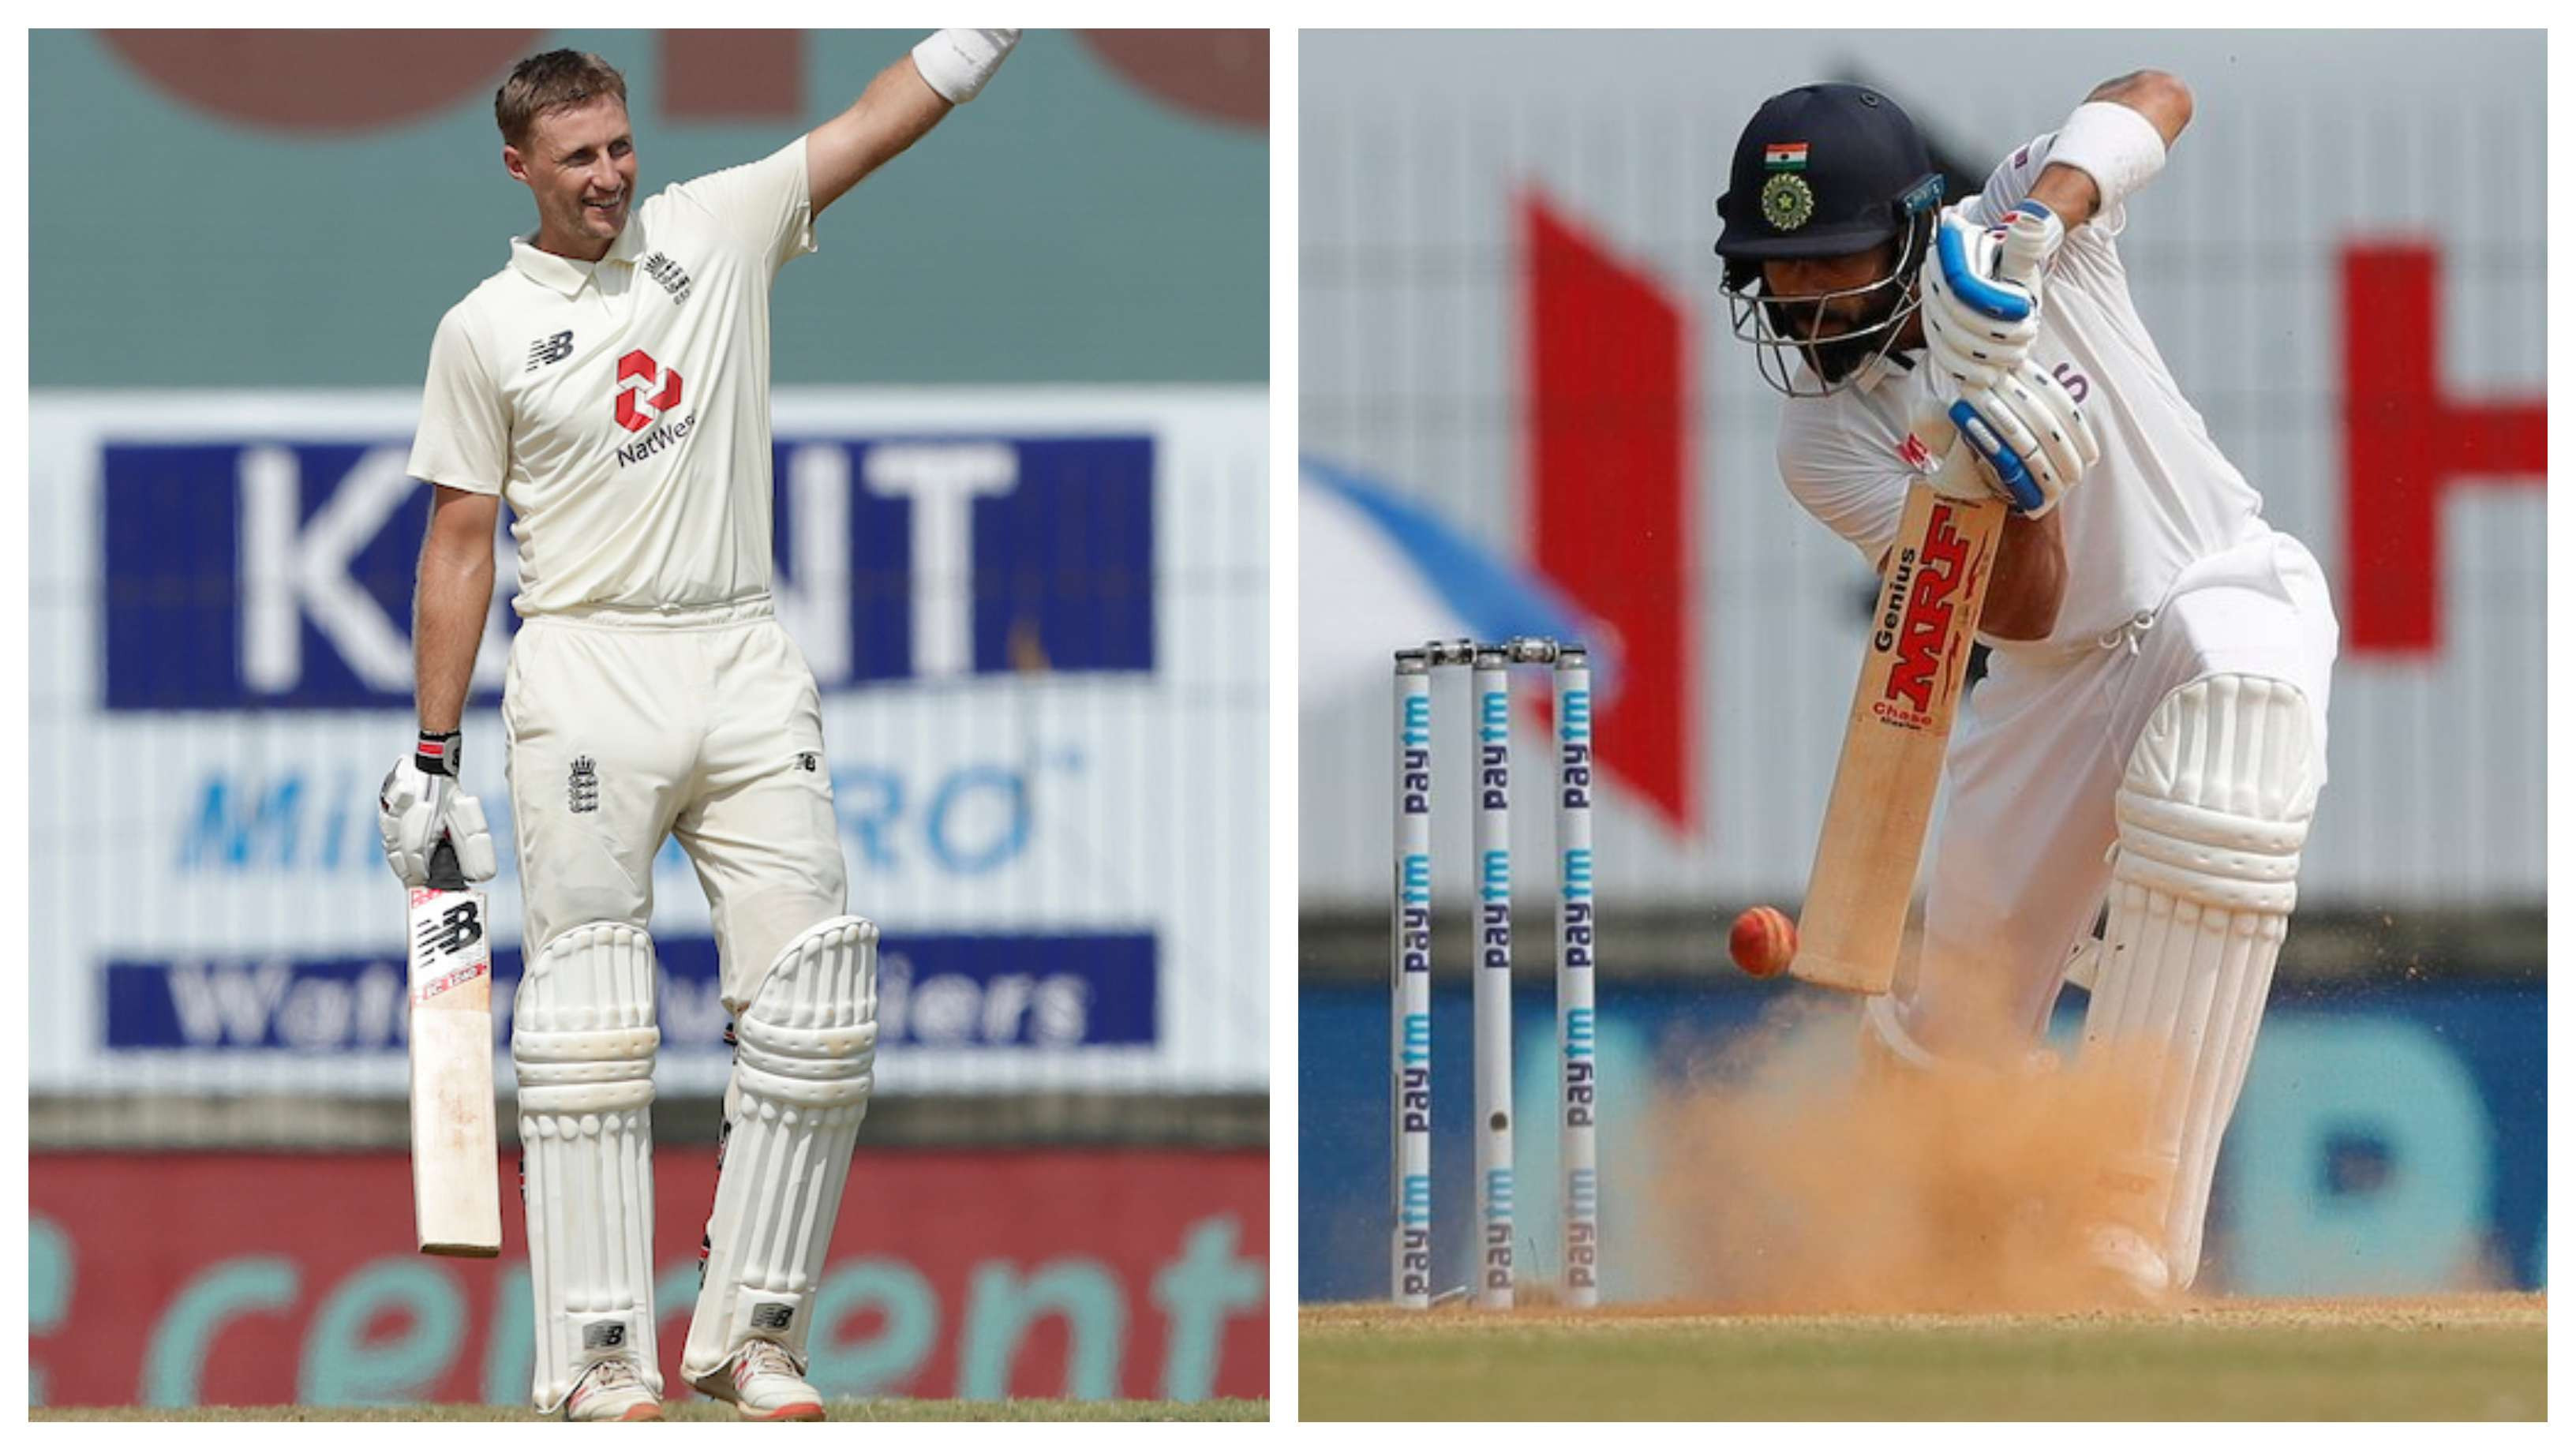 Joe Root overtakes Virat Kohli in ICC Test batting rankings after double ton in Chennai